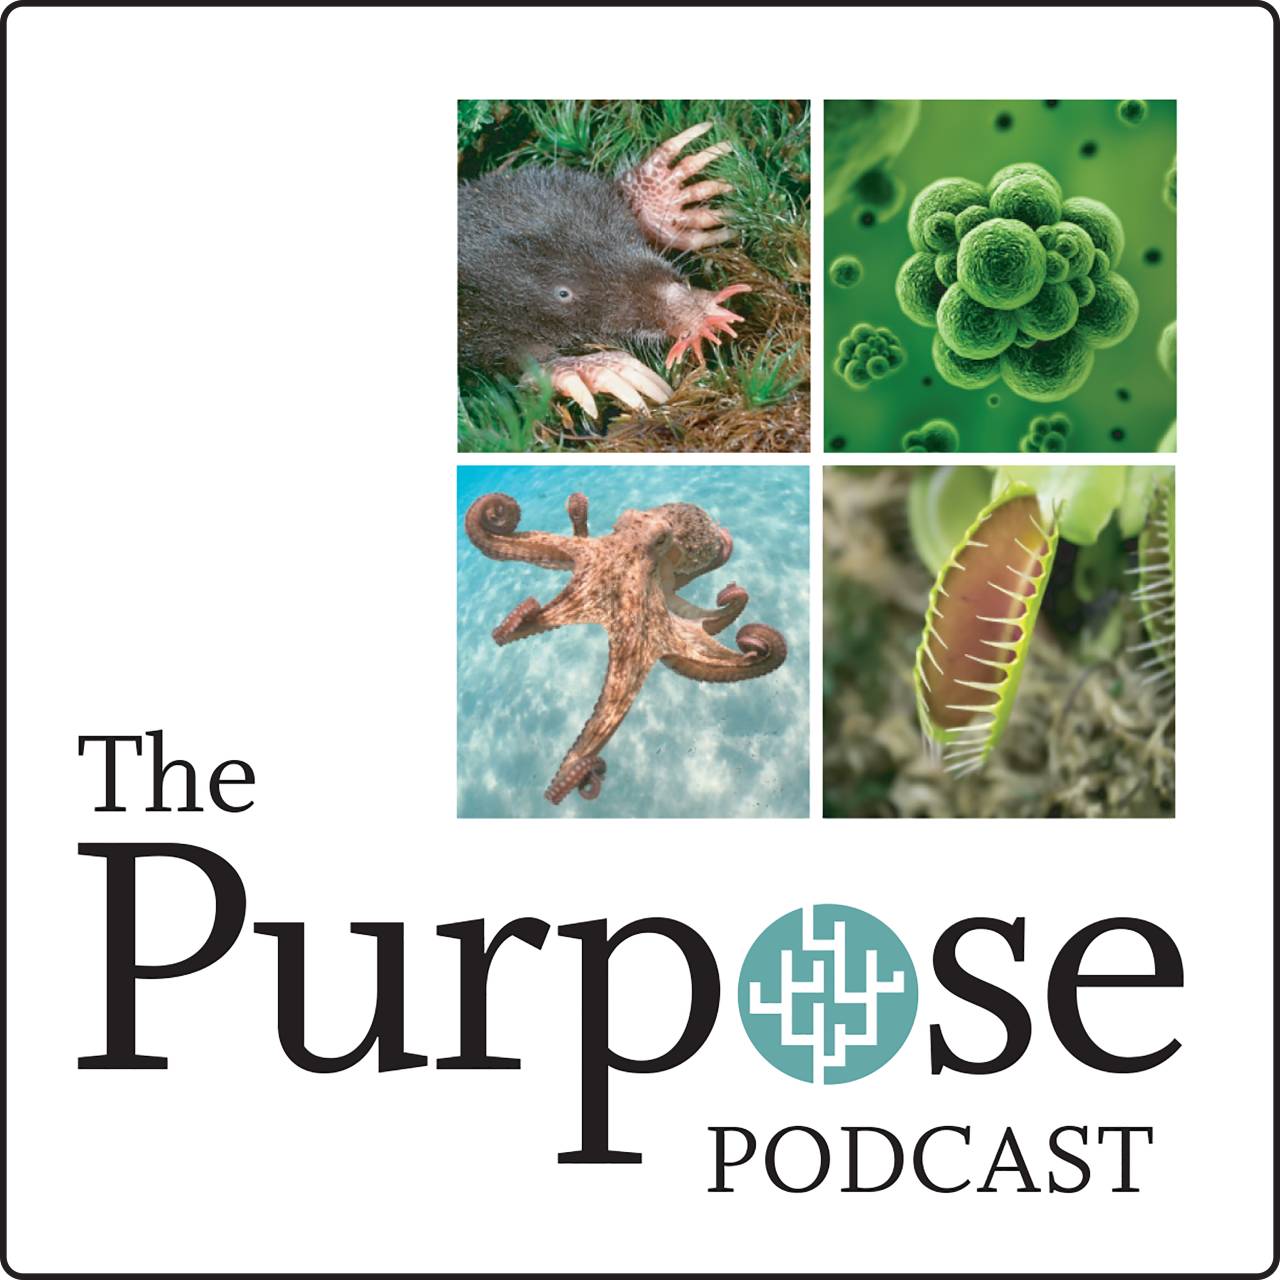 The Purpose Podcast